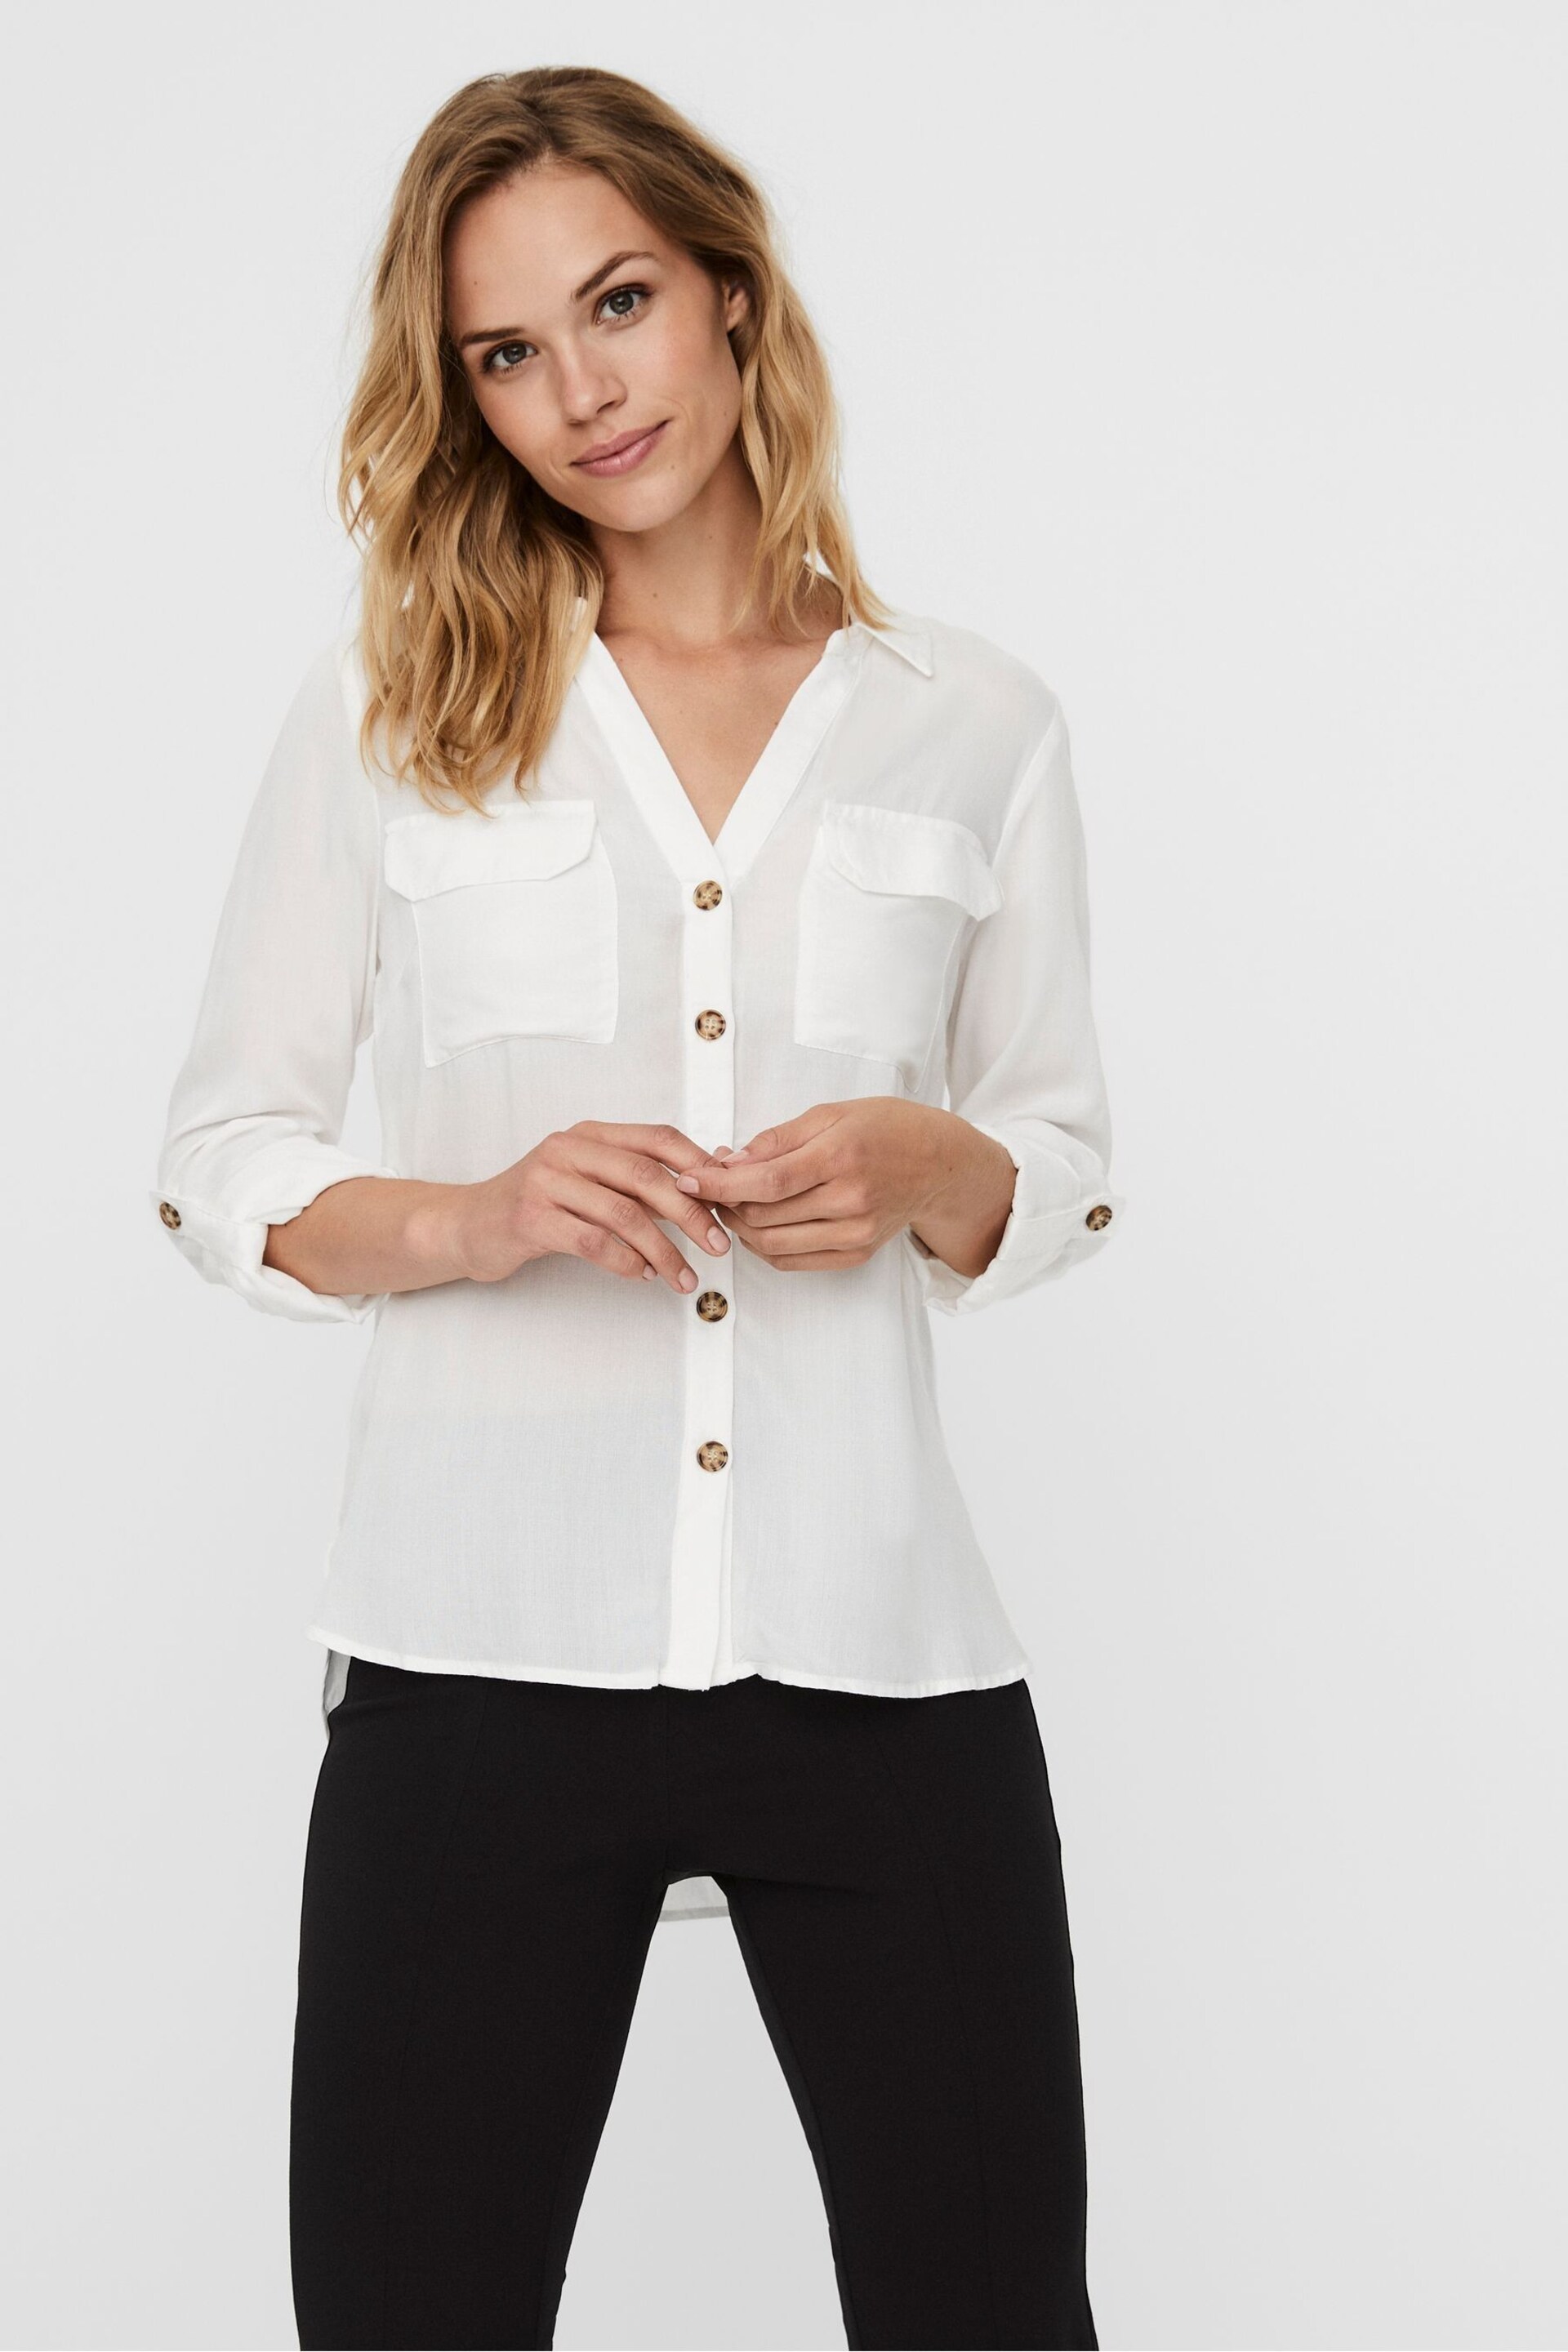 VERO MODA White Button Up Shirt - Image 1 of 6